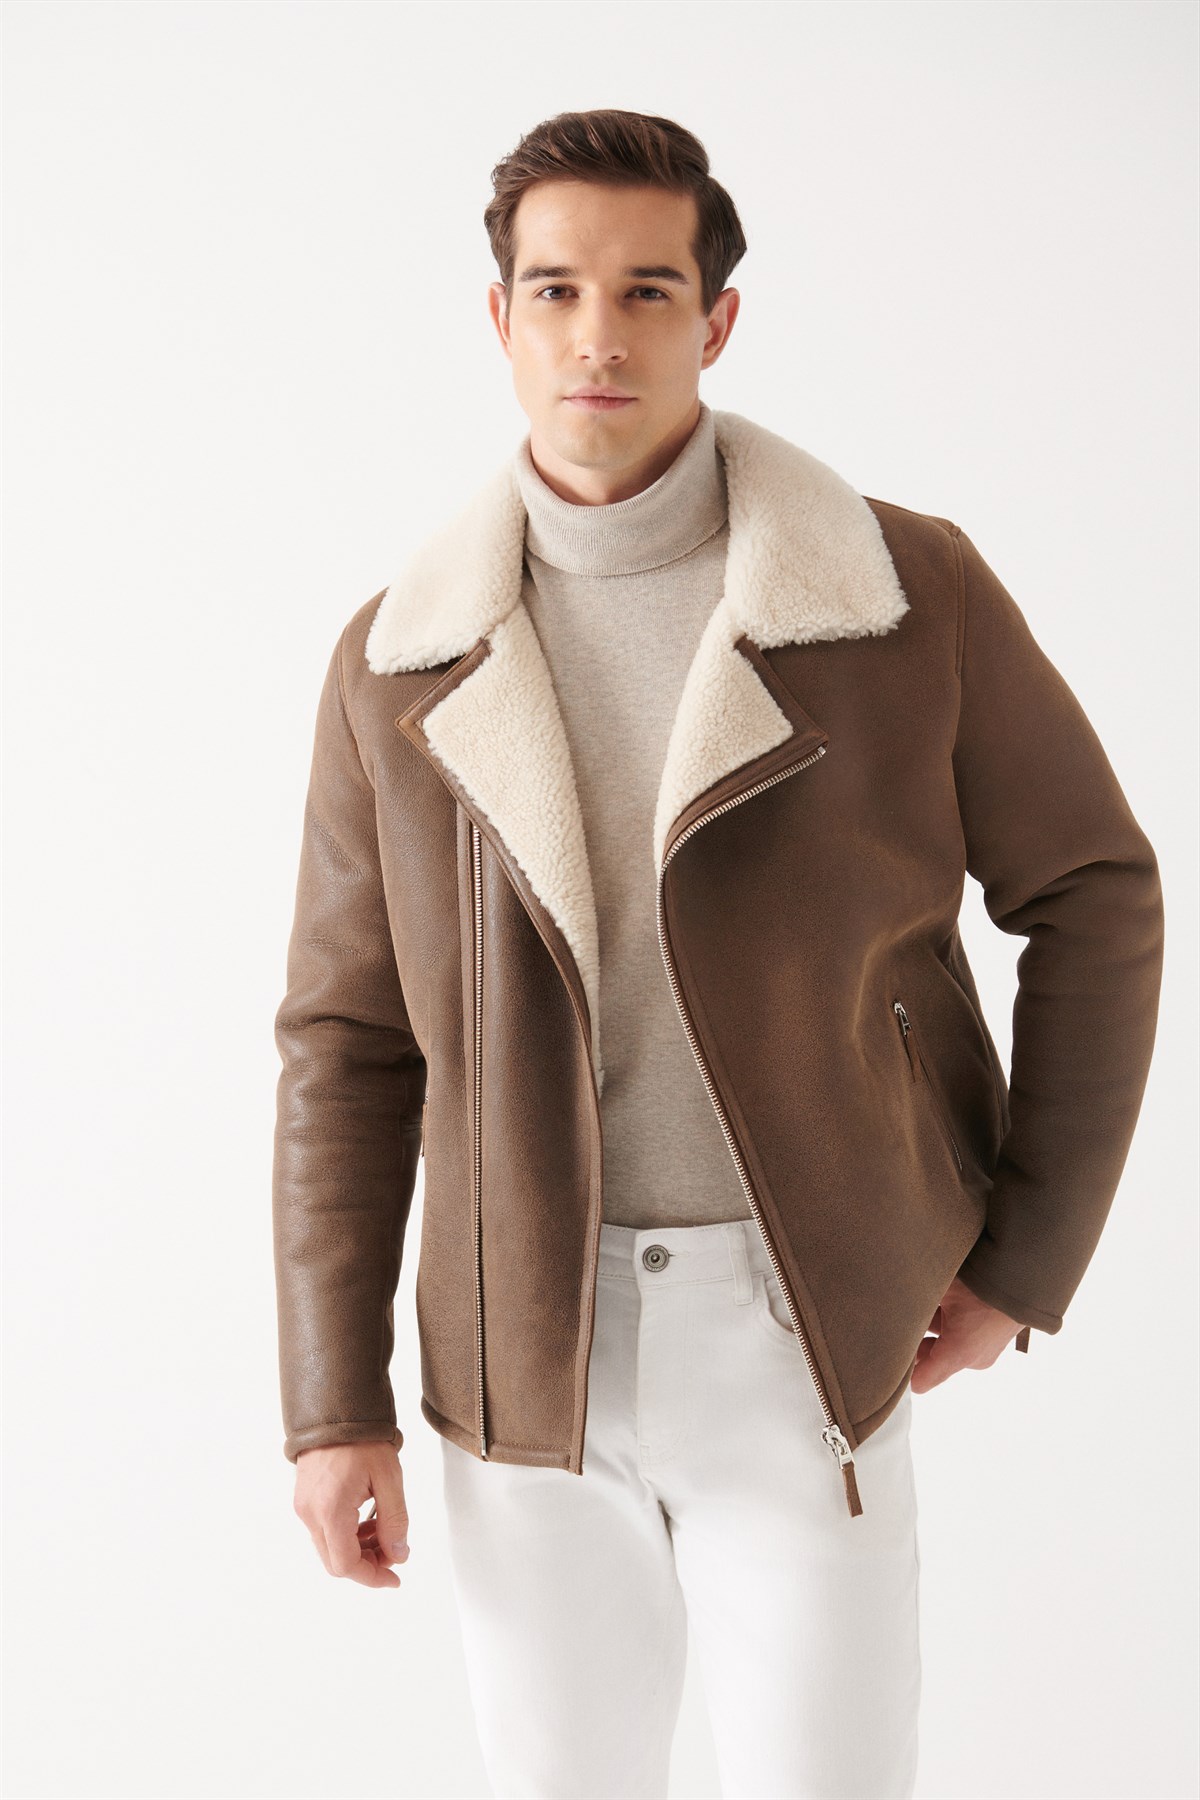 LUCAS Men Tan Shearling Jacket | Men Leather and Shearling Coat&Jacket